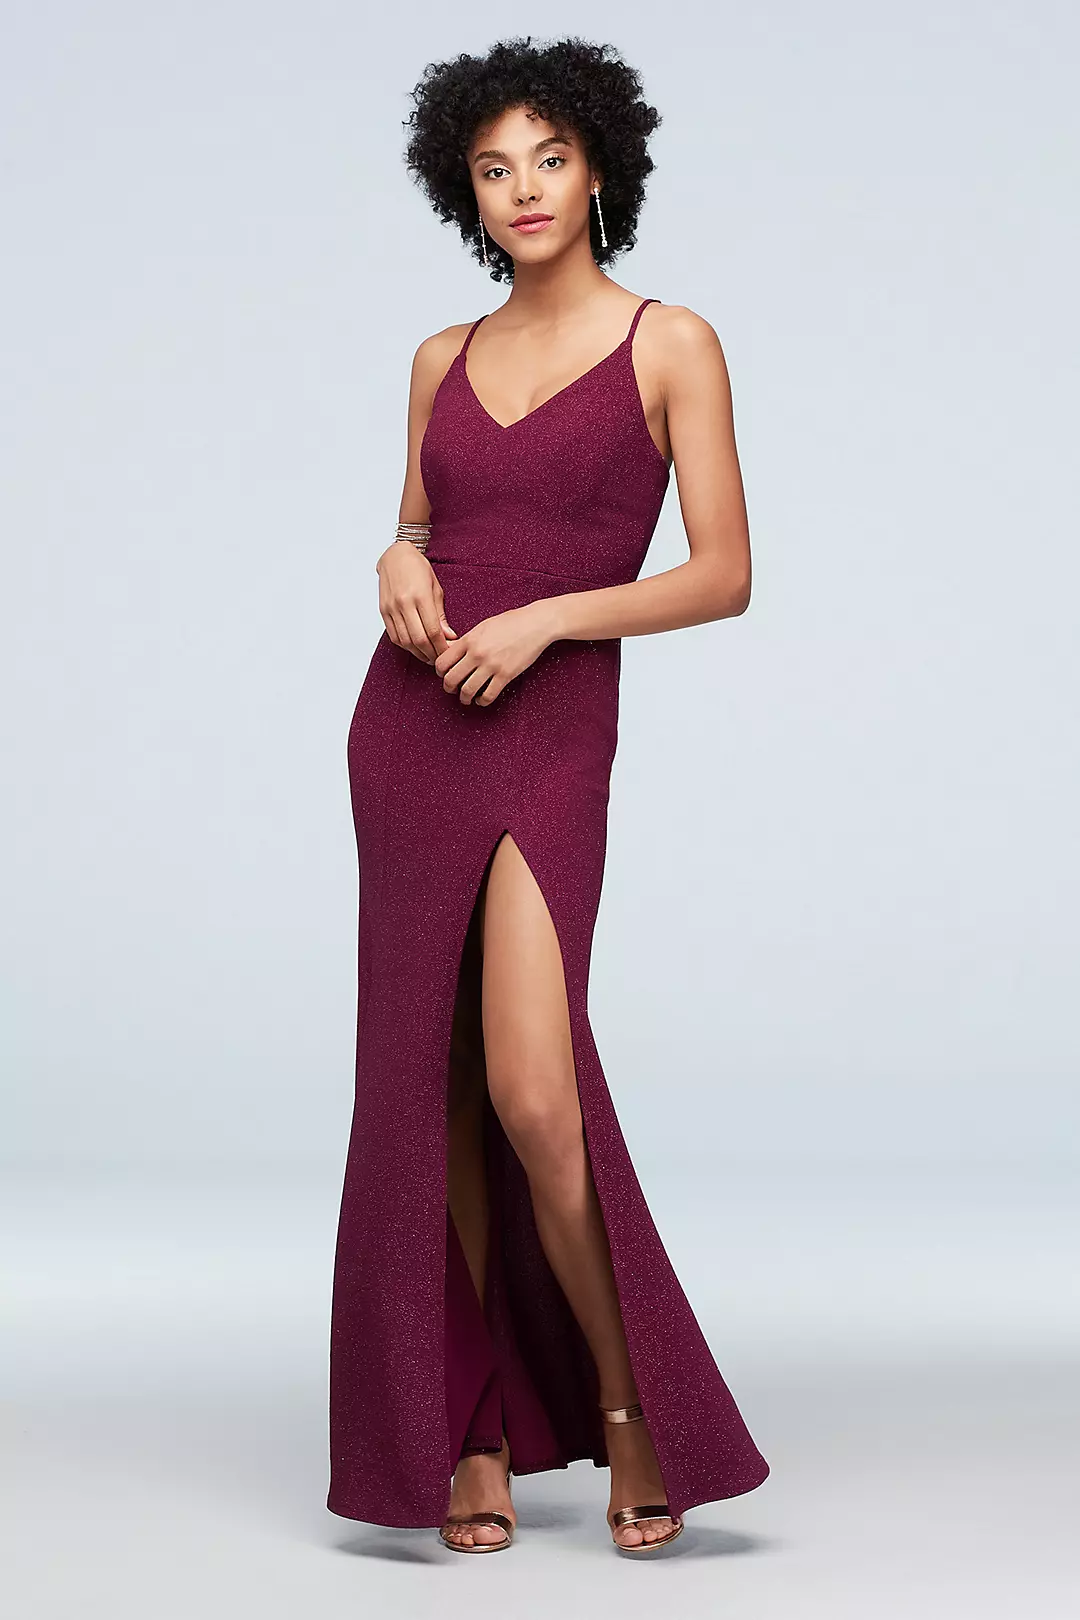 Skinny Strap V-Neck Glitter Sheath Dress with Slit Image